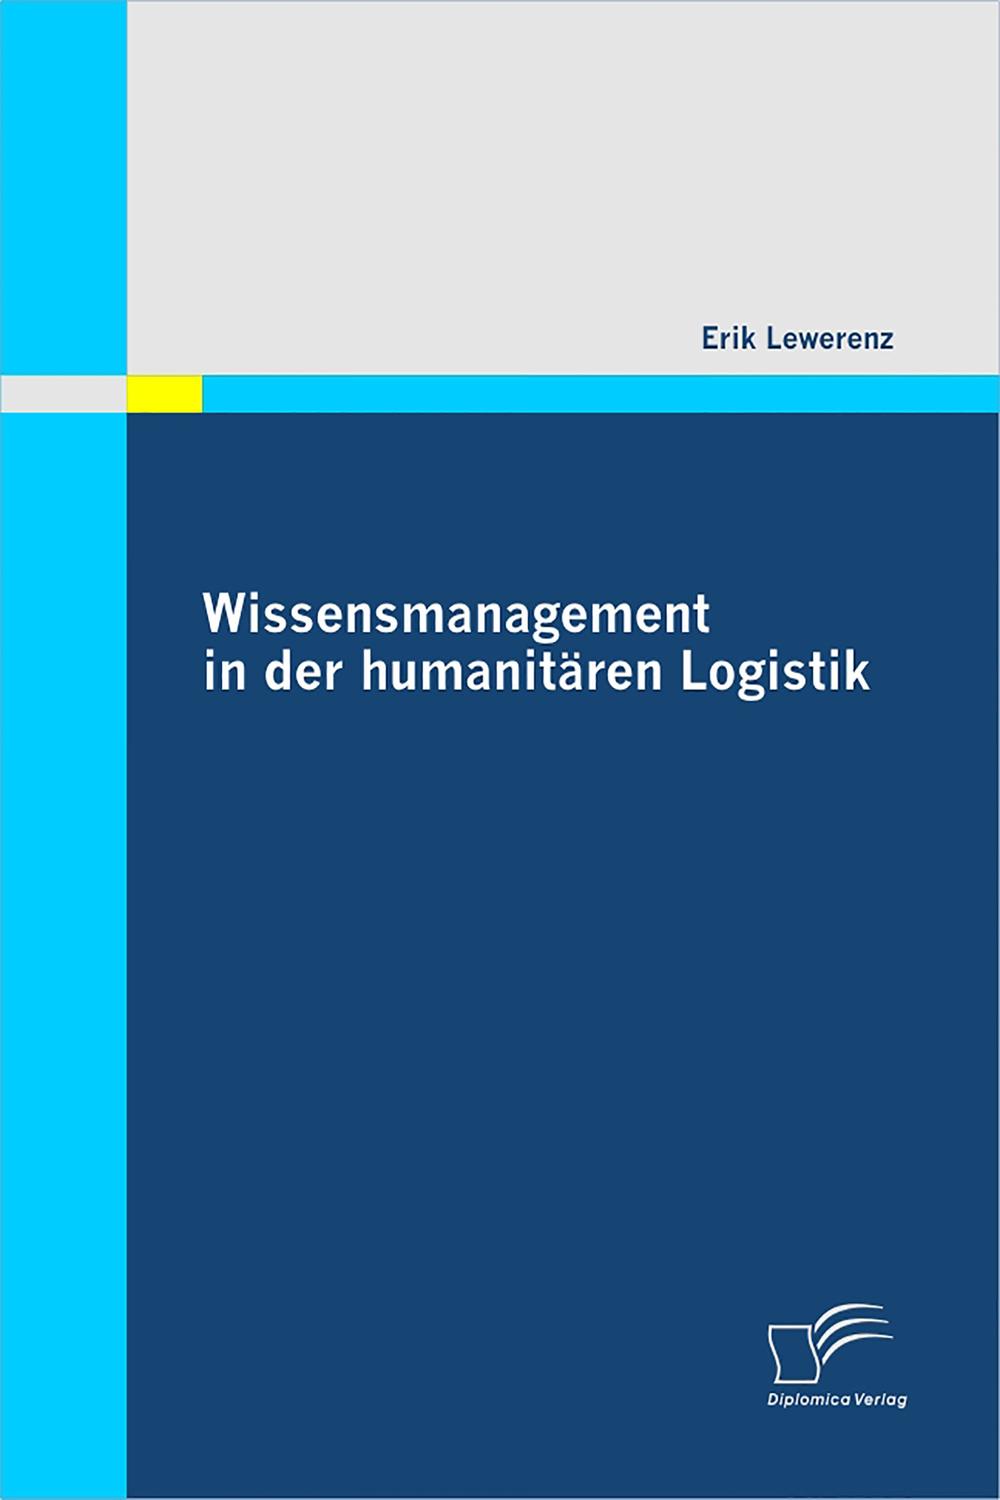 Wissensmanagement in der humanitären Logistik - Erik Lewerenz